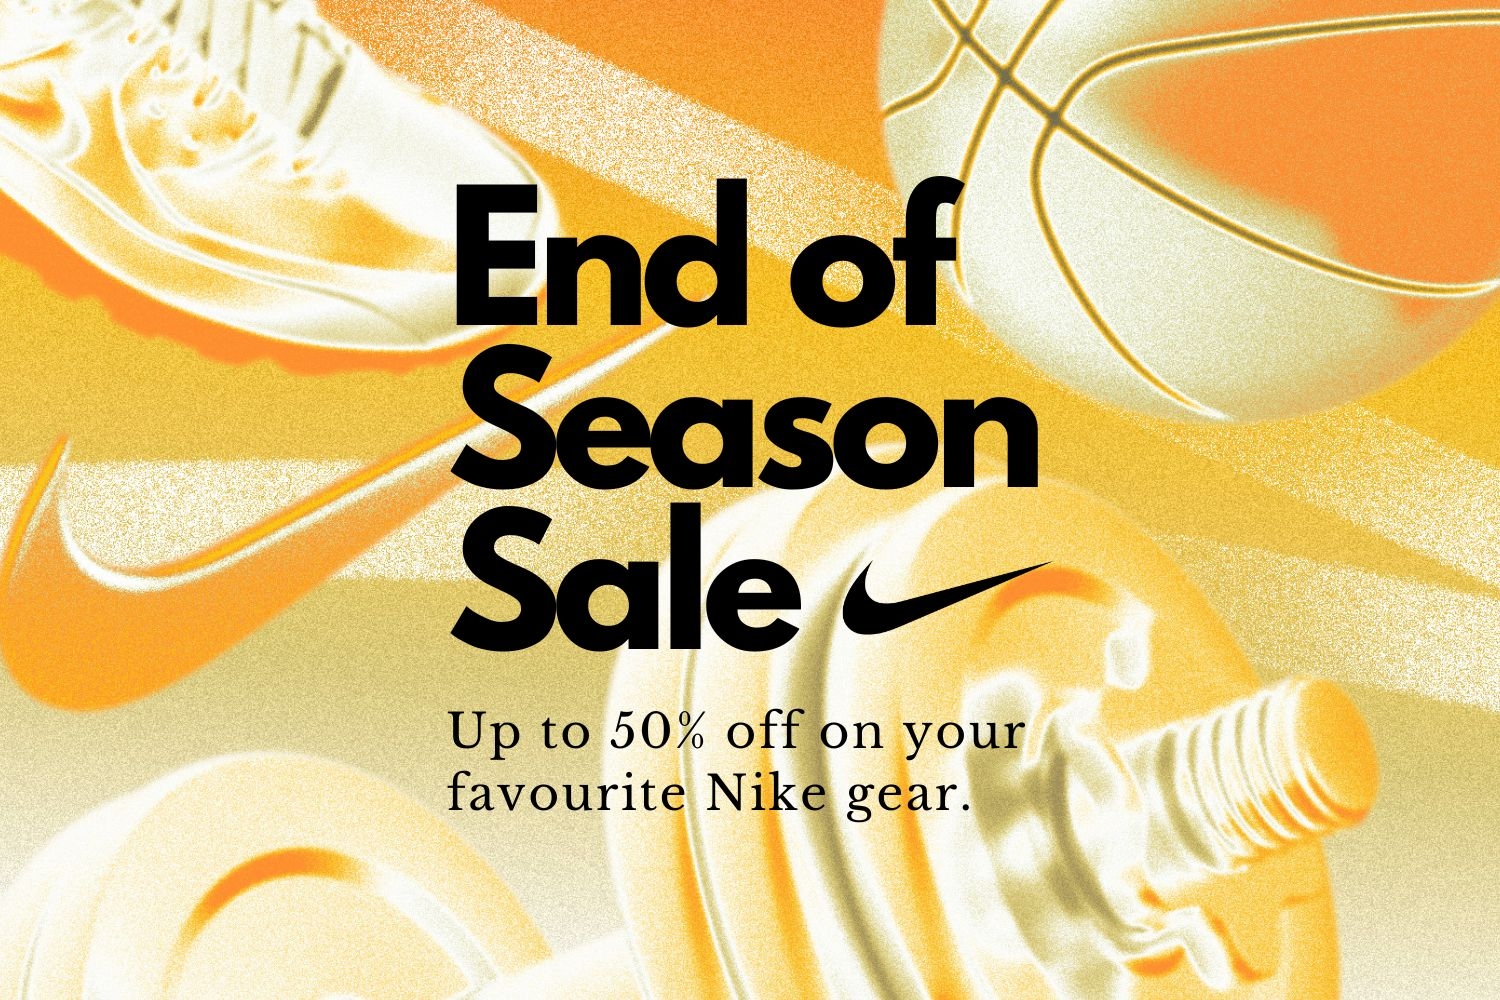 De Nike End of Season sale komt met hoge kortingen